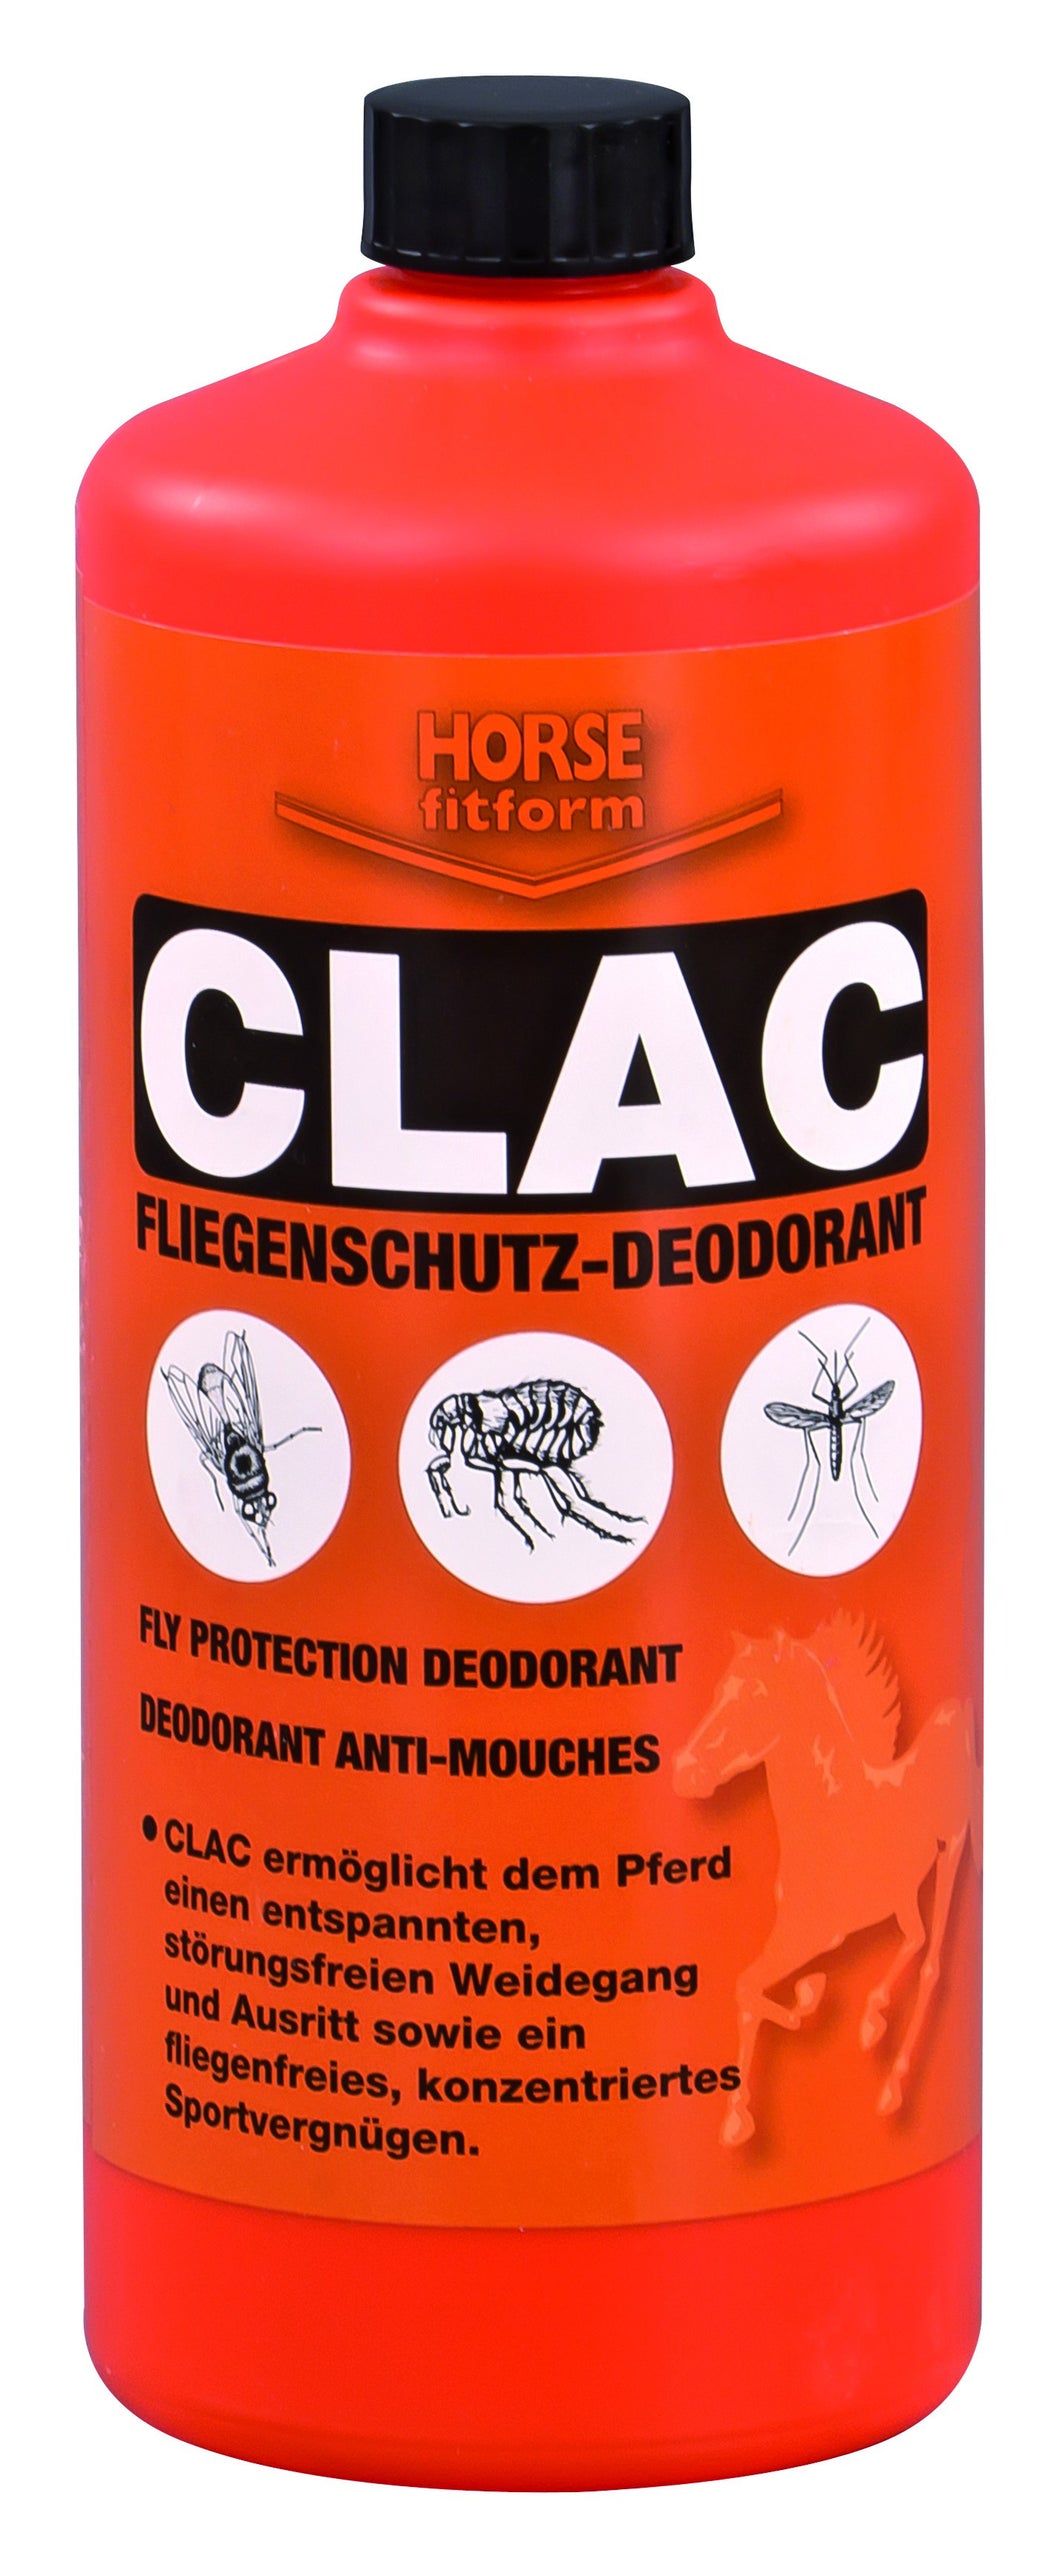 Anti Fly Deodorant Clac